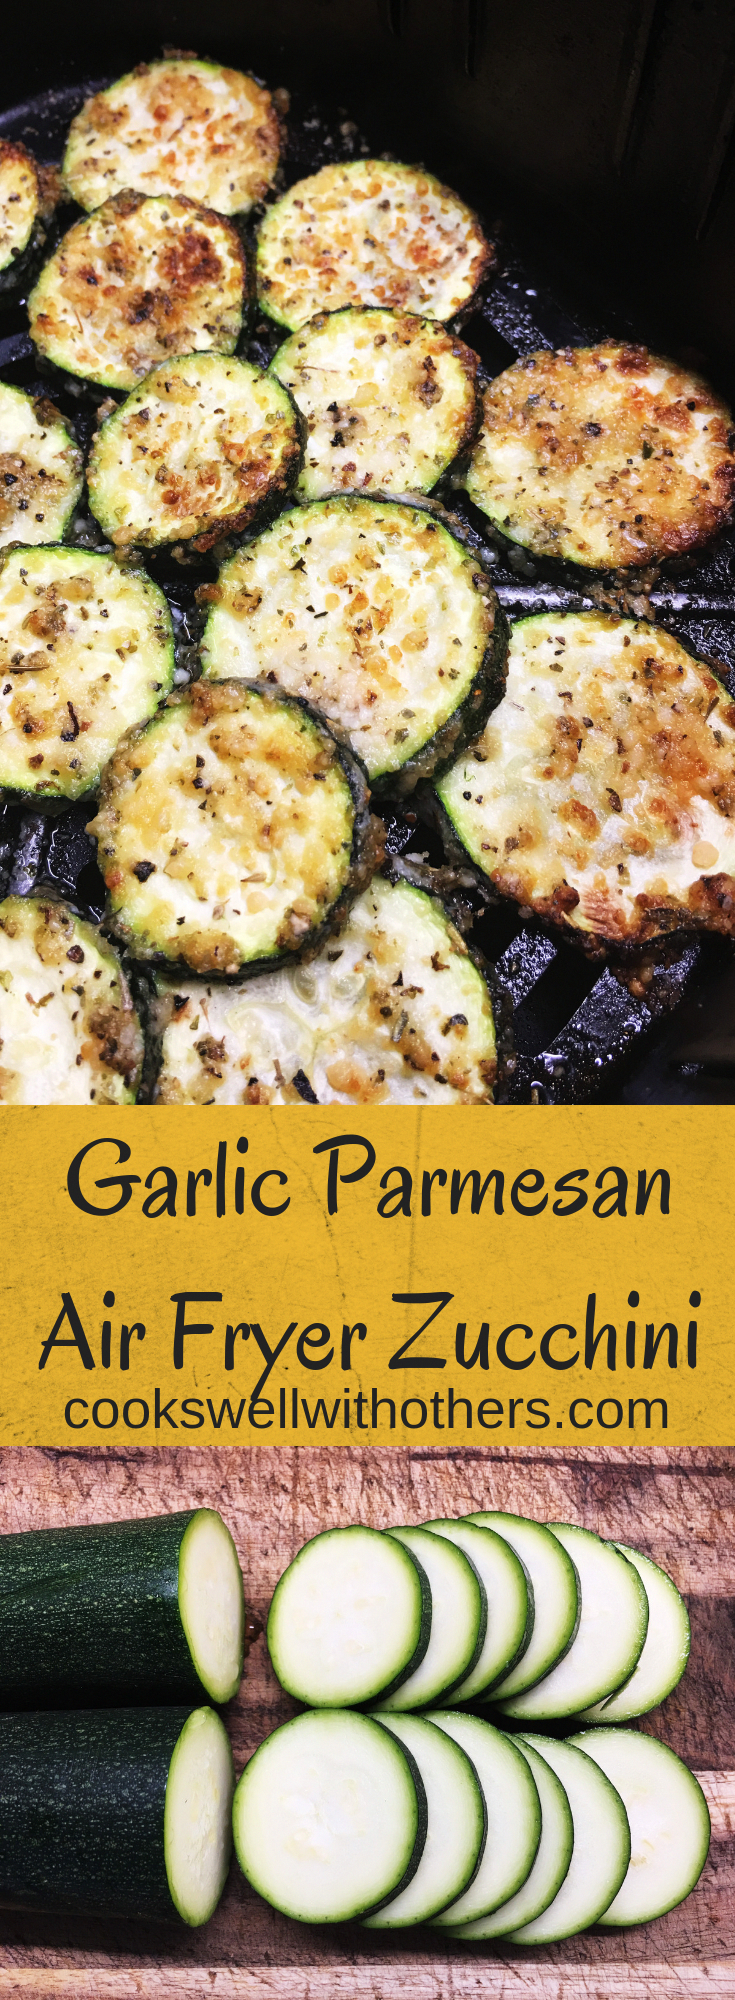 Garlic Parmesan Air Fryer Zucchini -   19 air fryer recipes healthy vegetables ideas